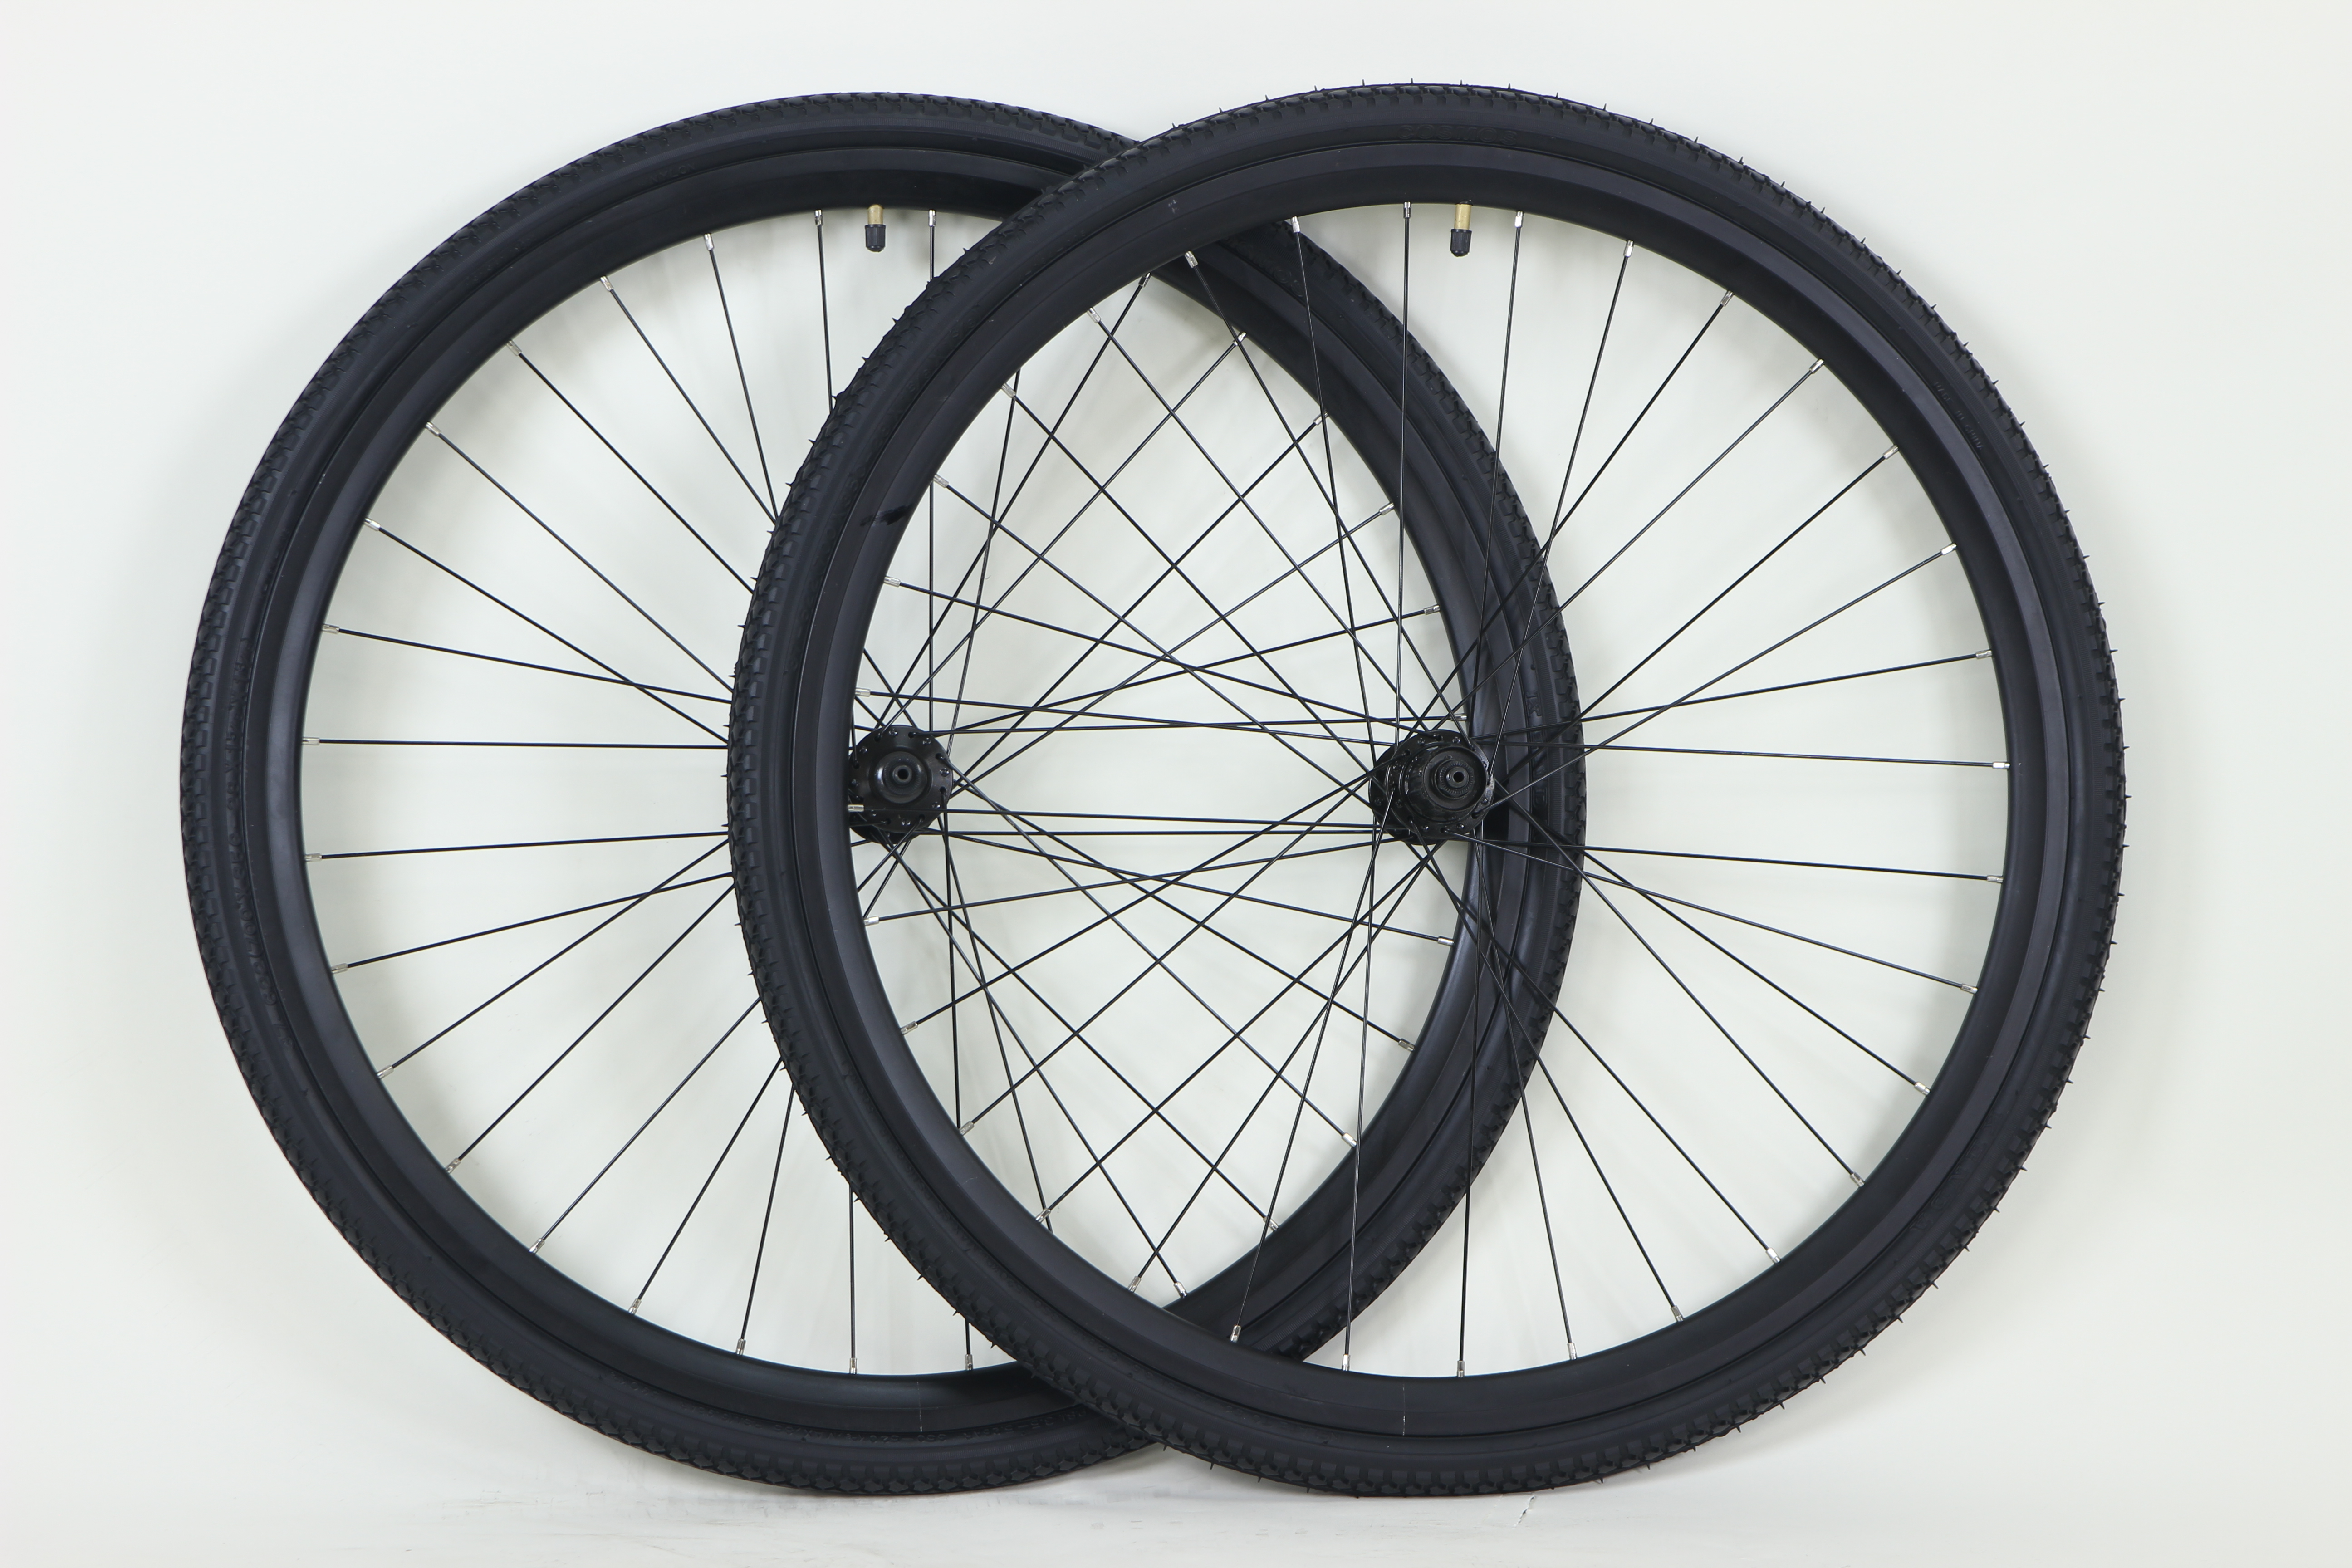 Wheels 700c Alloy Wheels Hybrid Bike Bicycle Centerlock Disc Hubs 700xc x 35mm Kendra Cosmos Tires Tubes Image